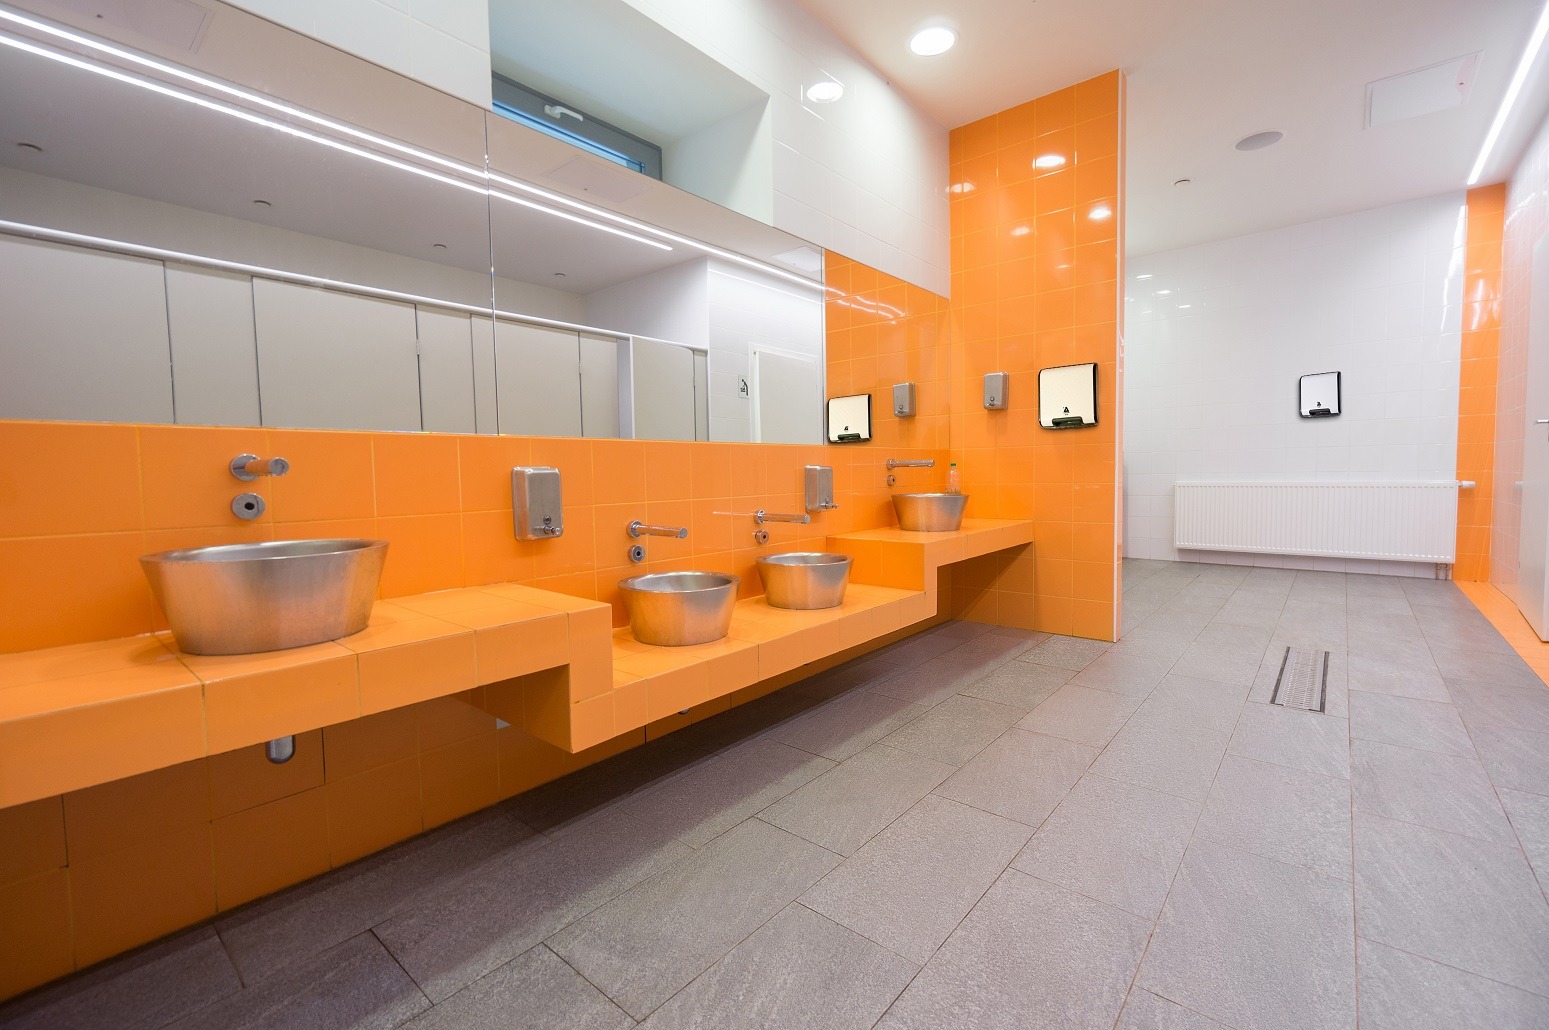 How to design a child-friendly washroom